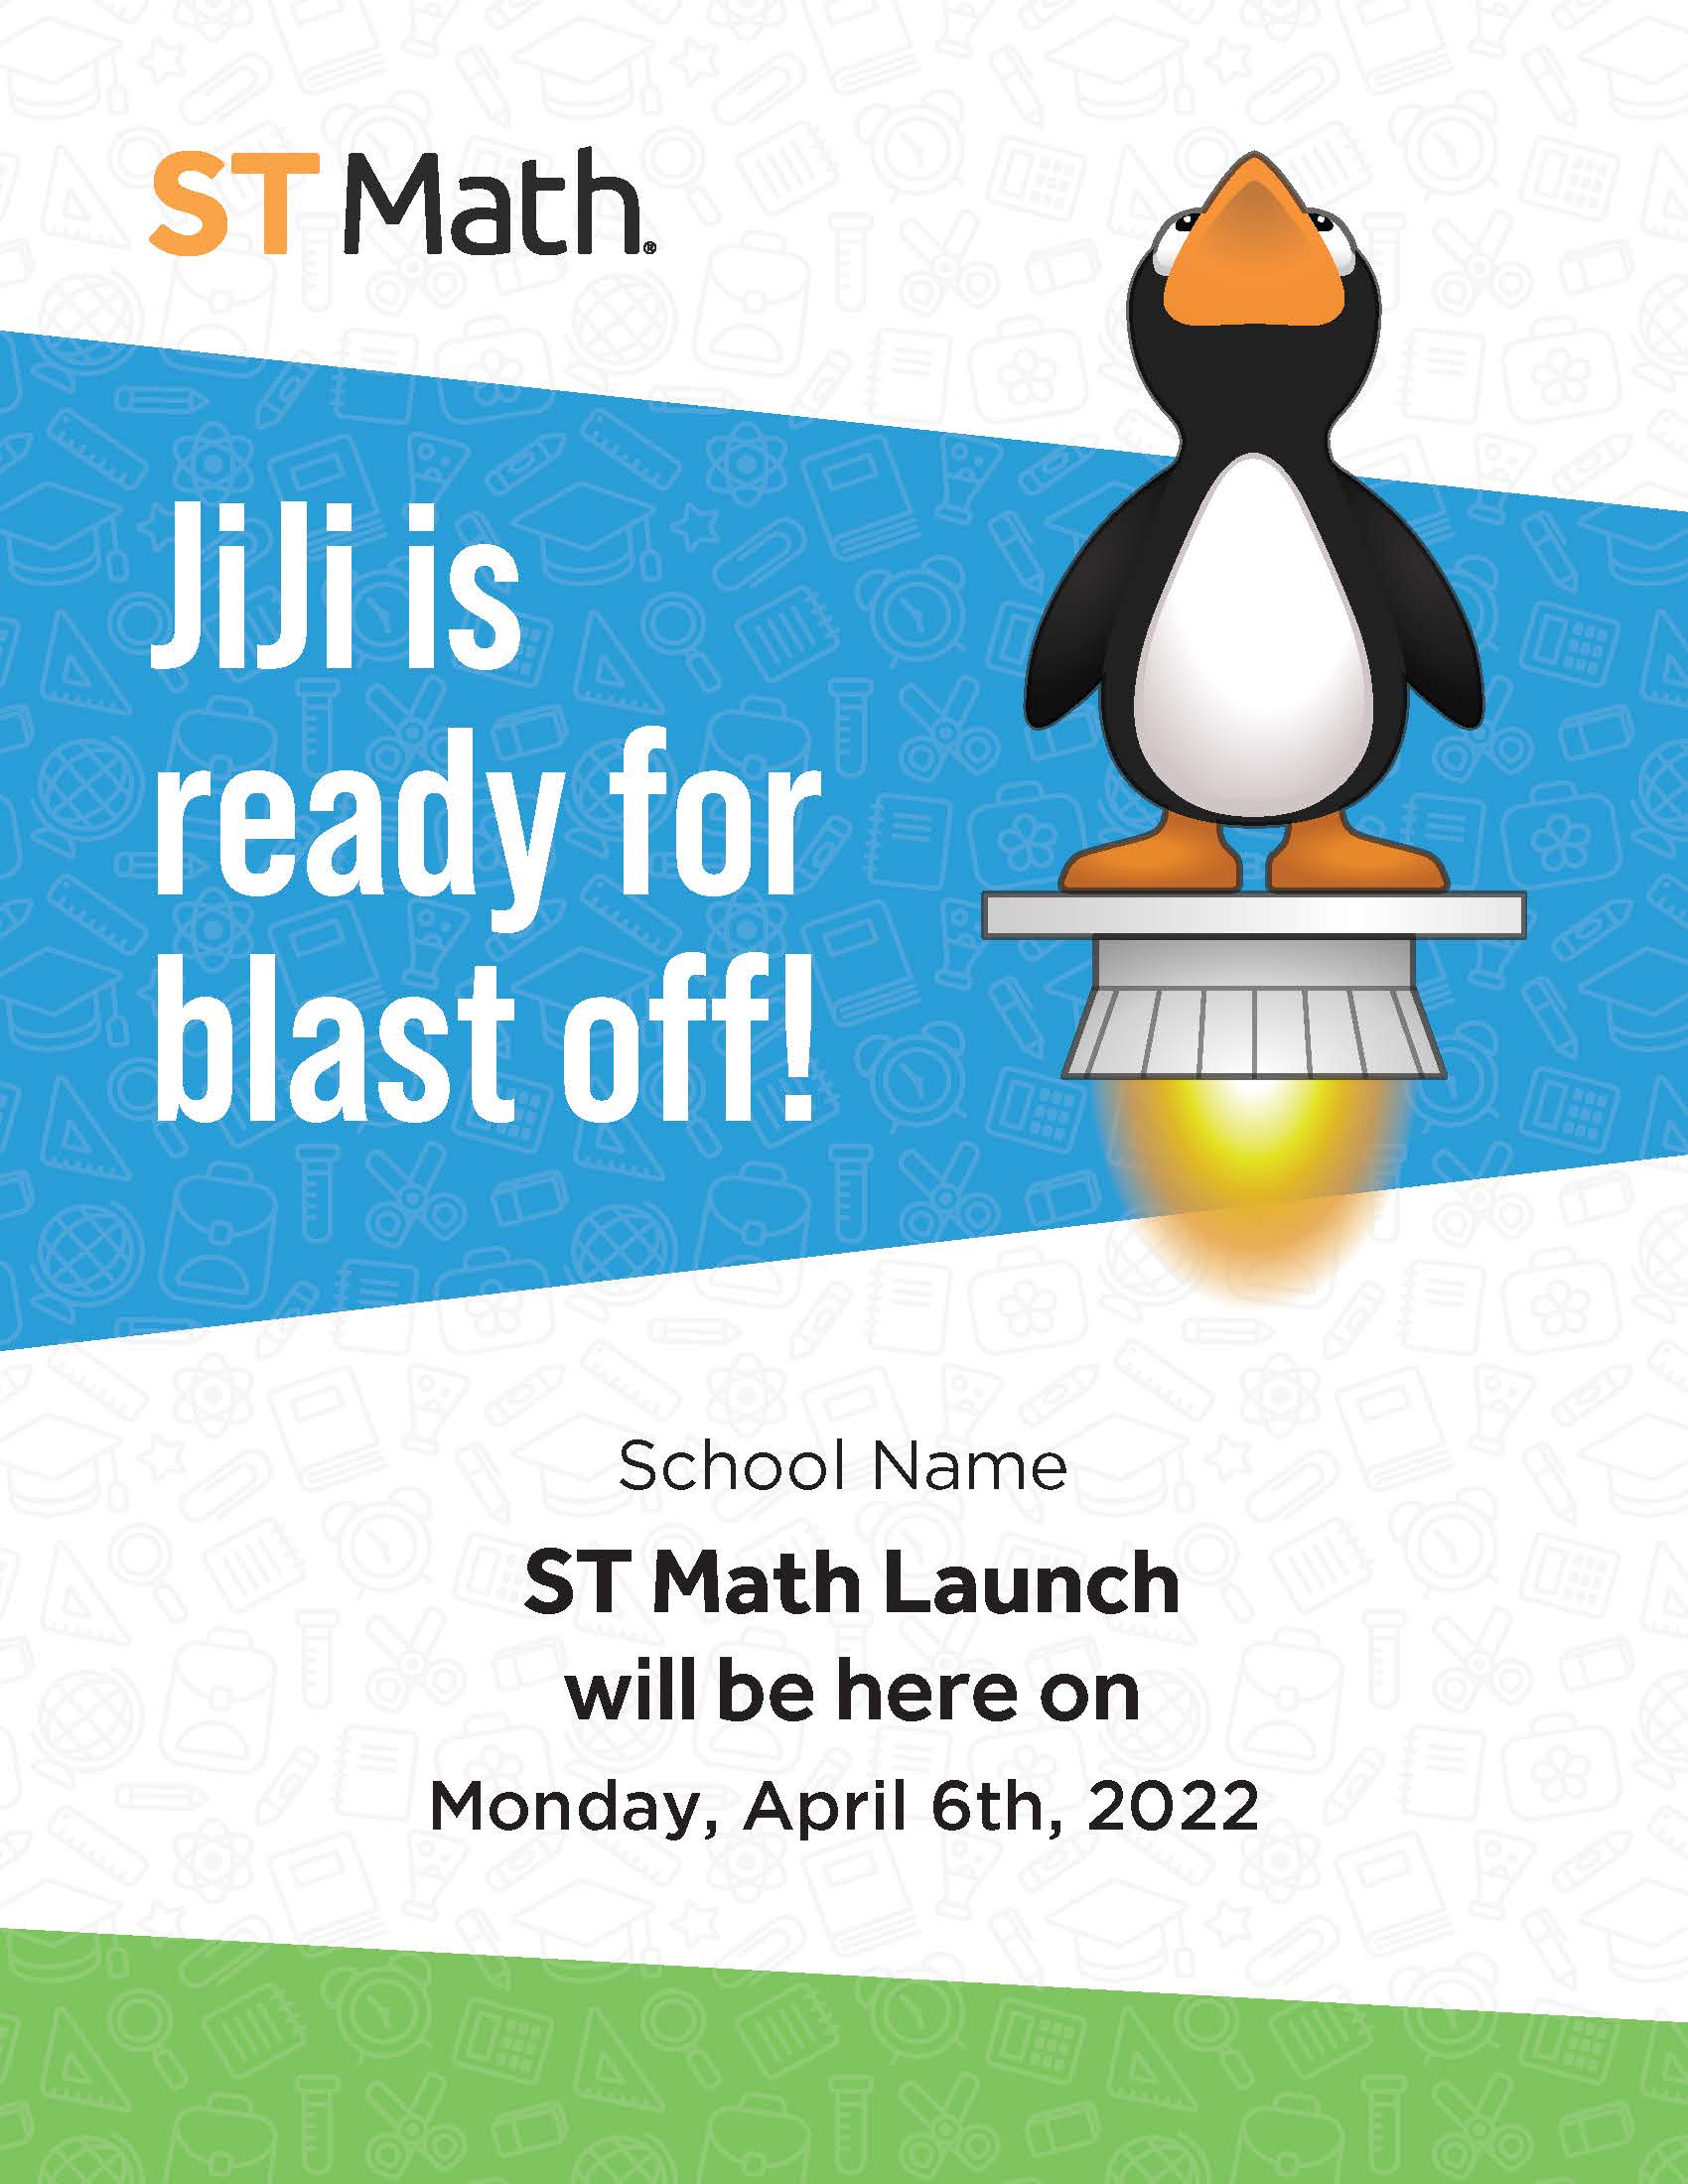 ST Math Launch Poster